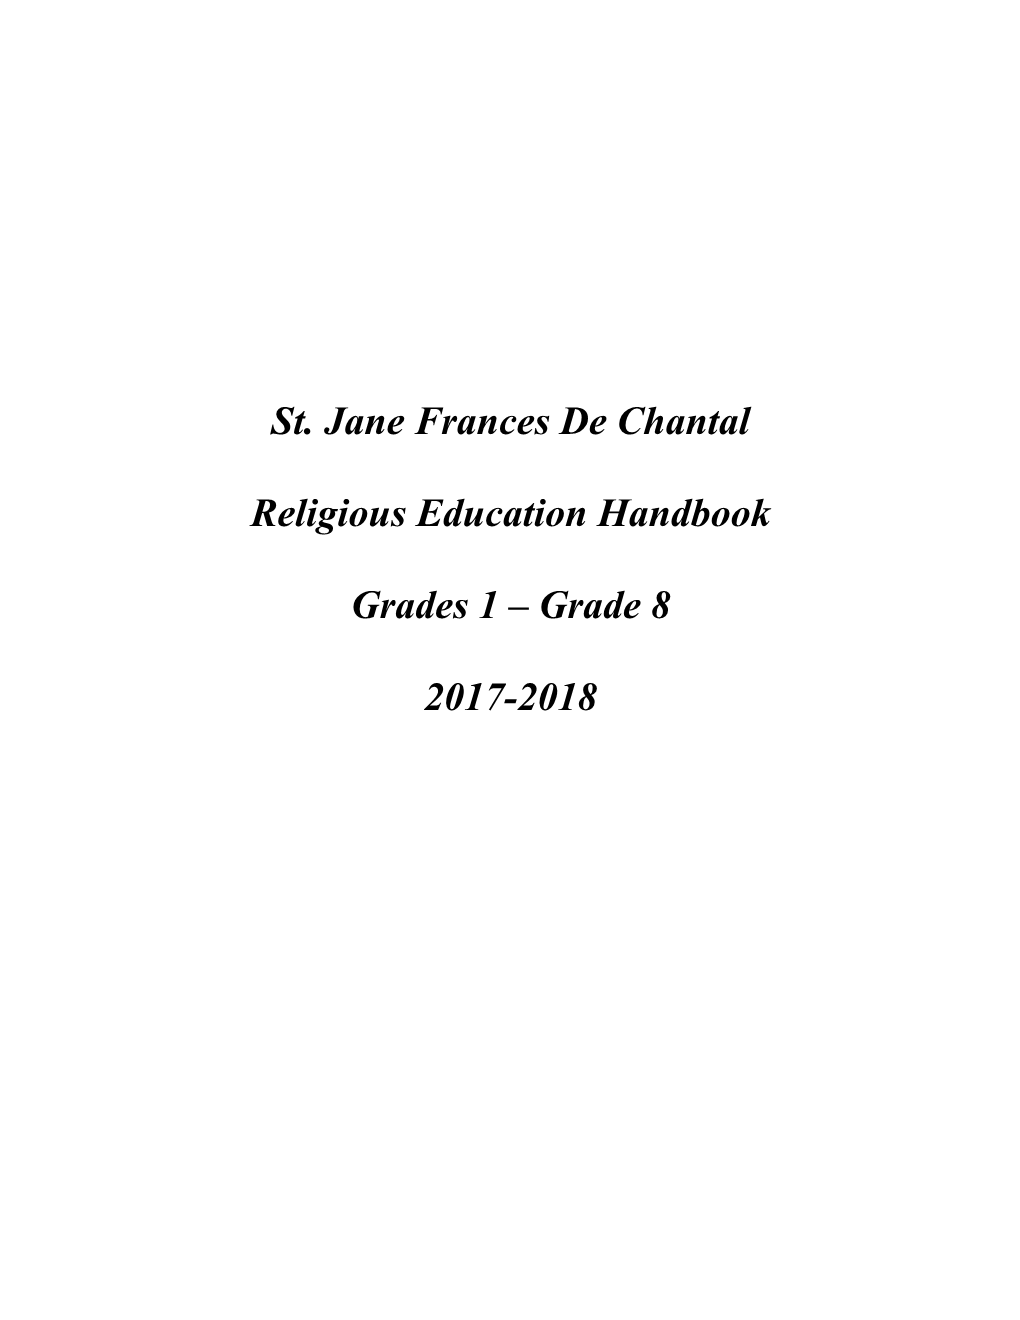 St. Jane Frances De Chantal Religious Education Handbook